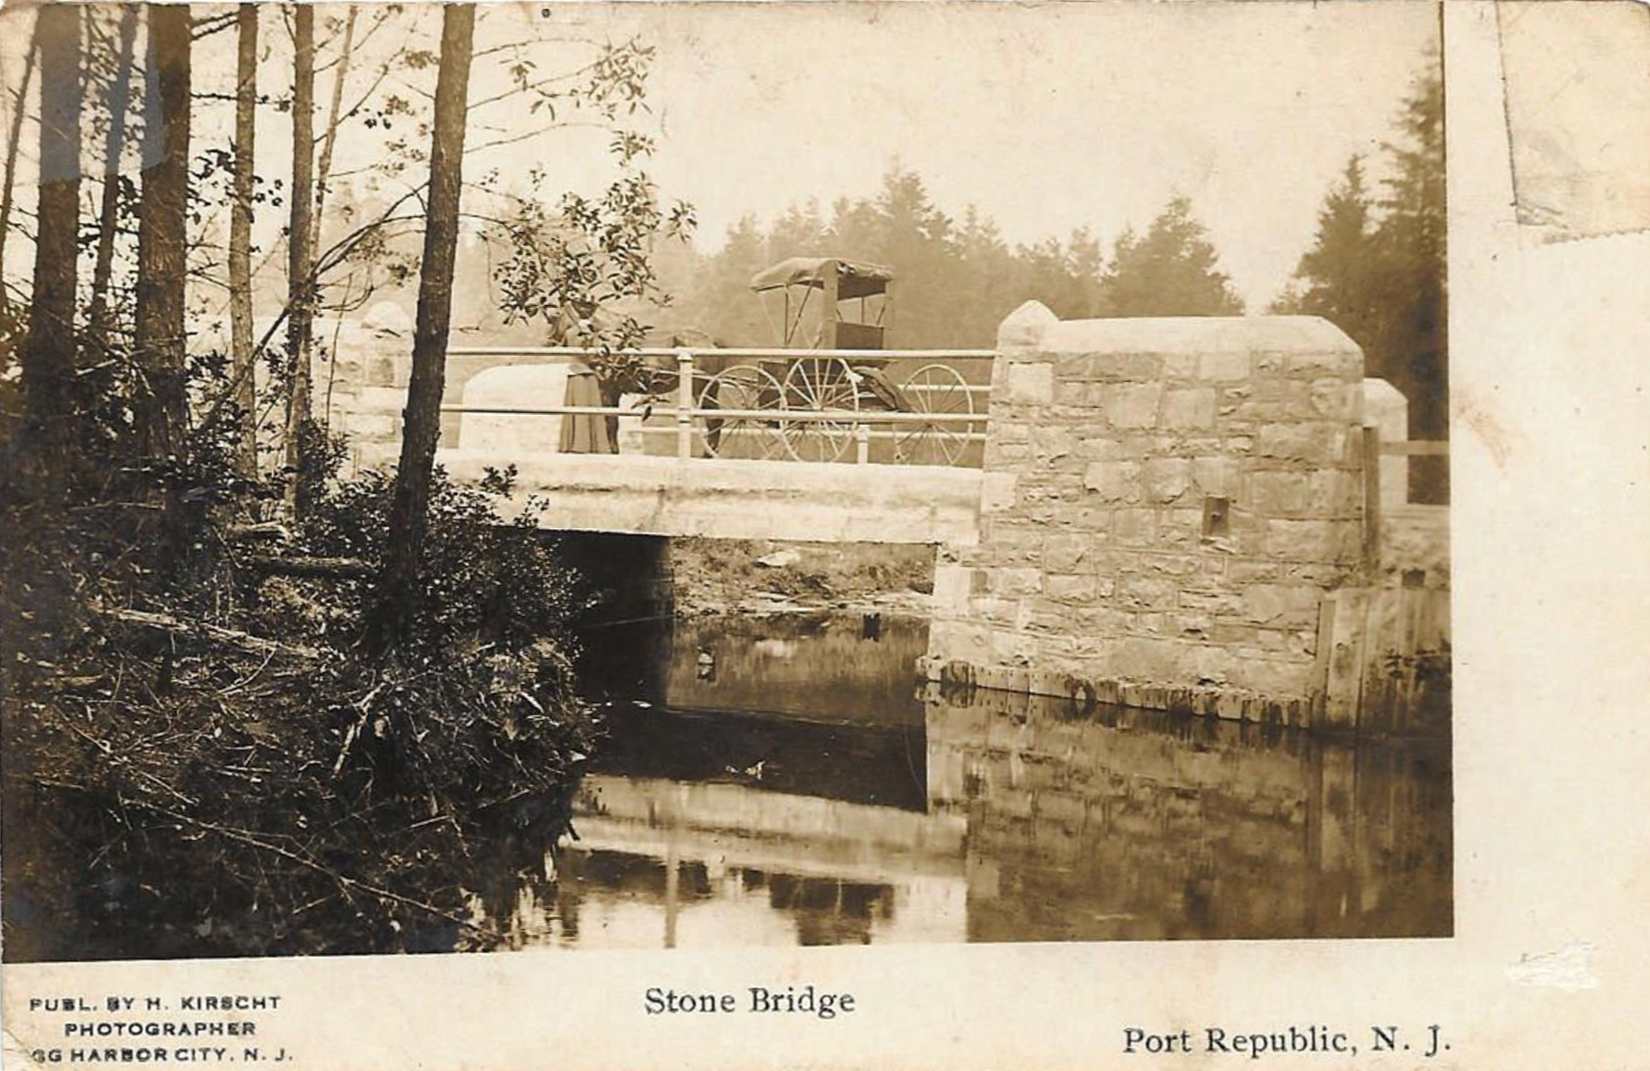 Port Republic - The Stone Bridge - By Max Kirscht - c 1910